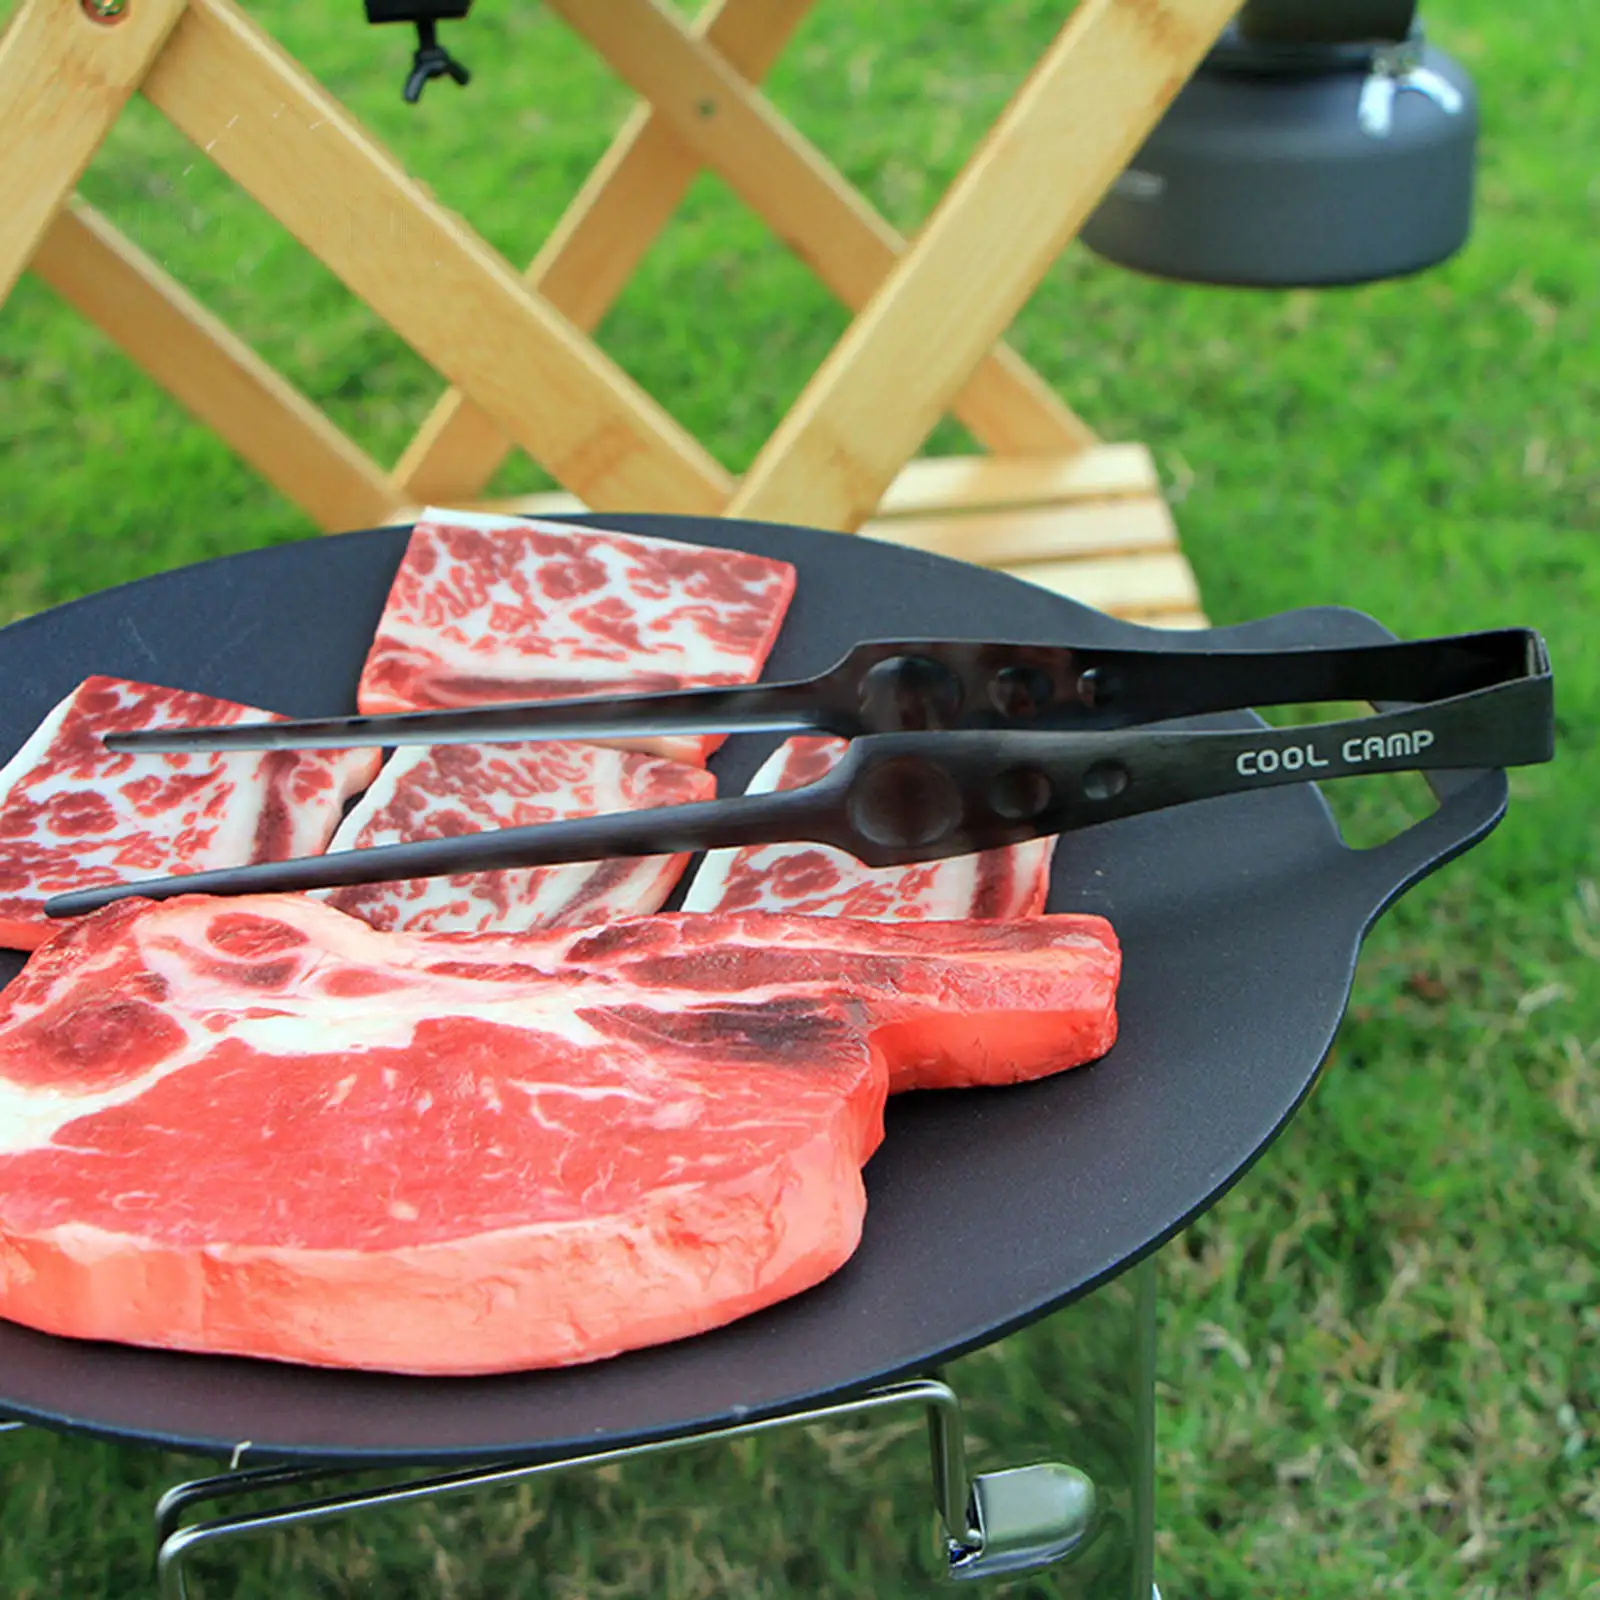 Tongs Tweezer Clip BBQ Reusable Ultralight Handy Non-Slip Utensil for Steak Serving Toast Kitchen Bacon Food Camping